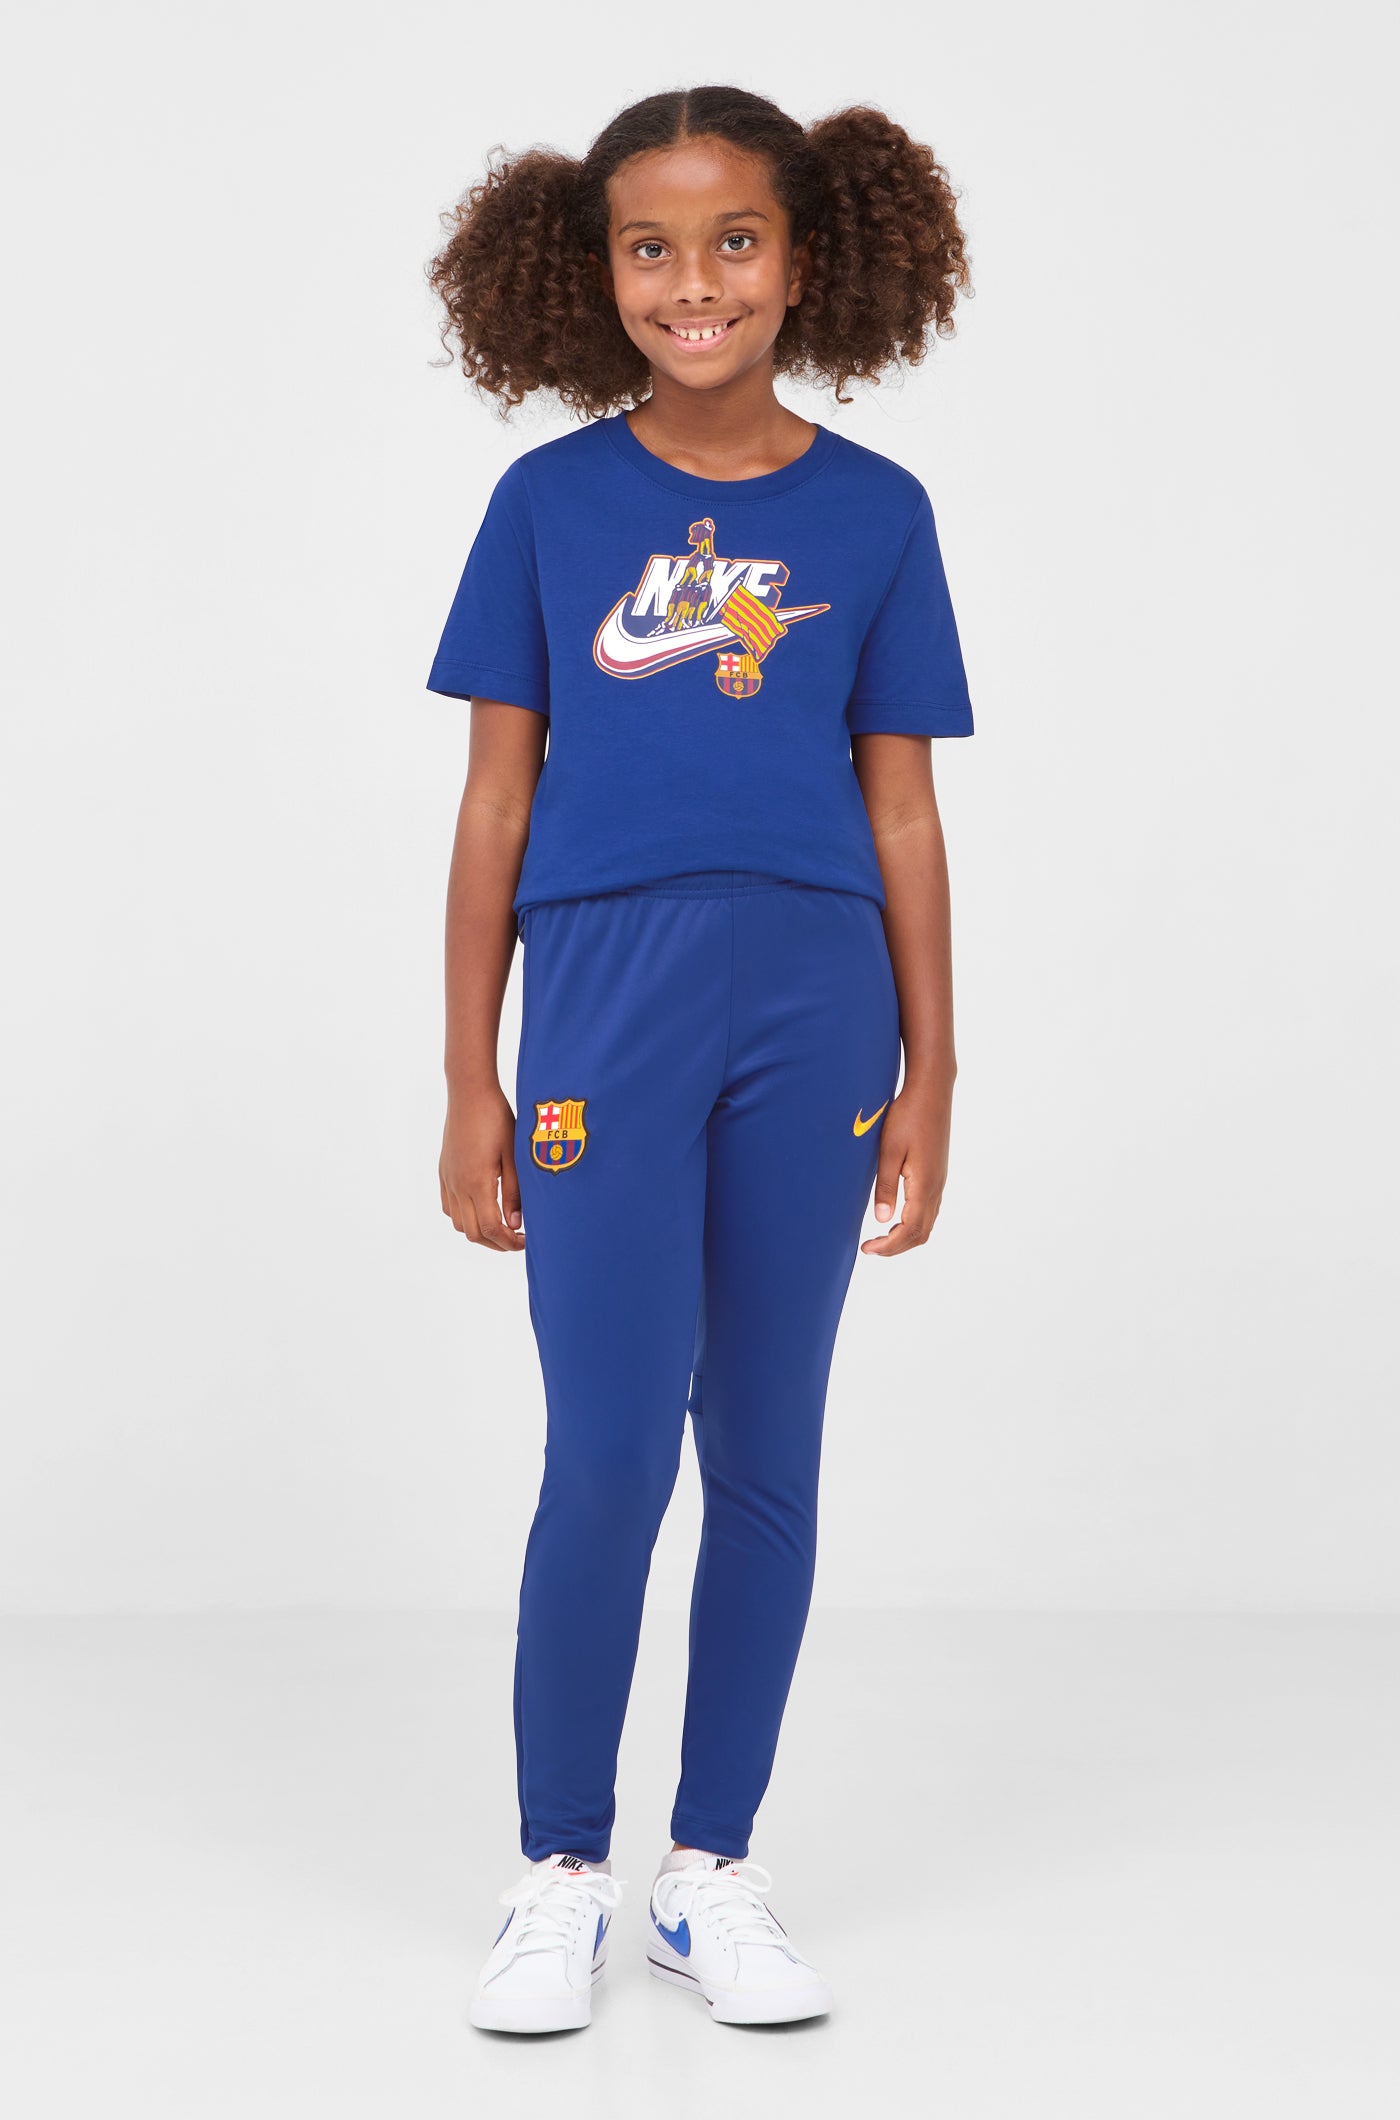 Camiseta castellers azul Barça Nike - Junior